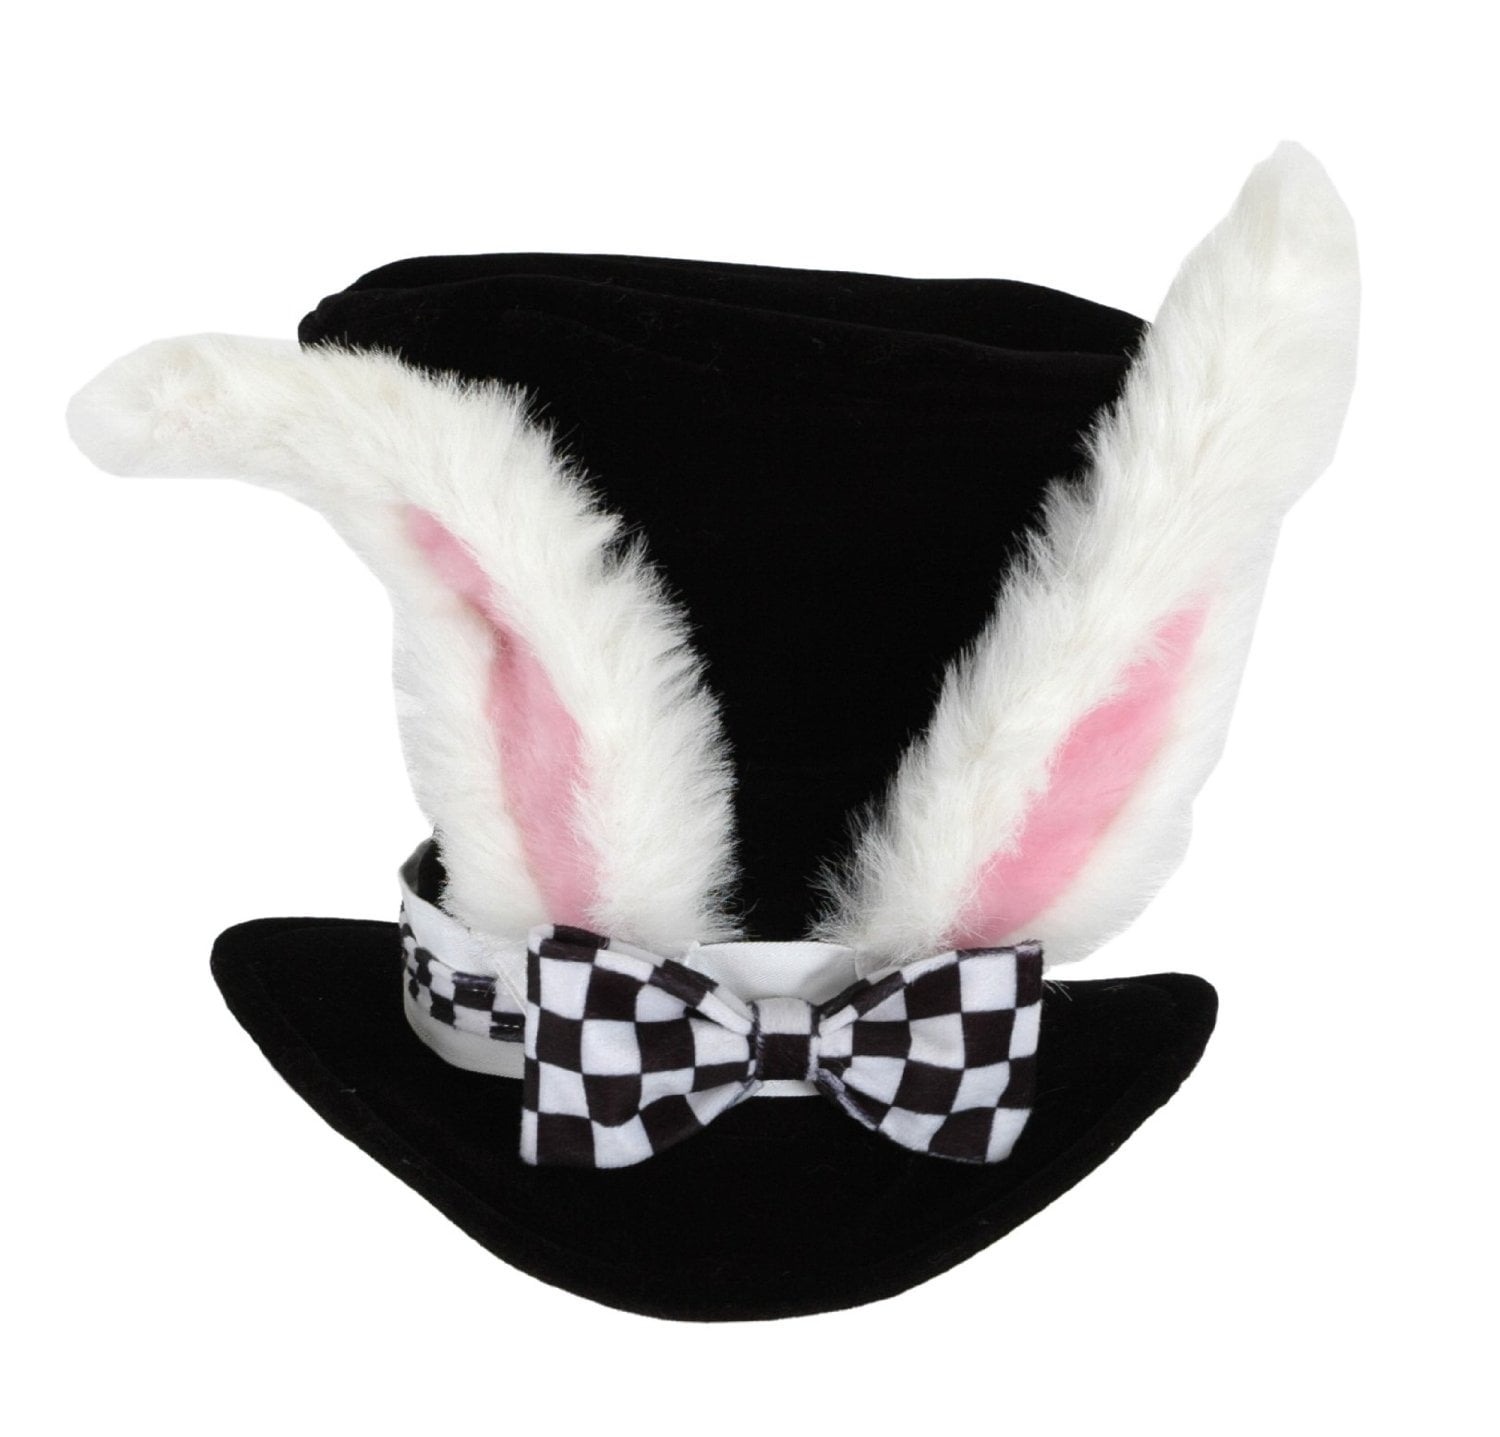 Bunny rabbit kids costume hat White hat rabbit ears Baby rabbit hat White rabbit Rabbit Winter Hat Rabbit Face Hat Knitted bunny